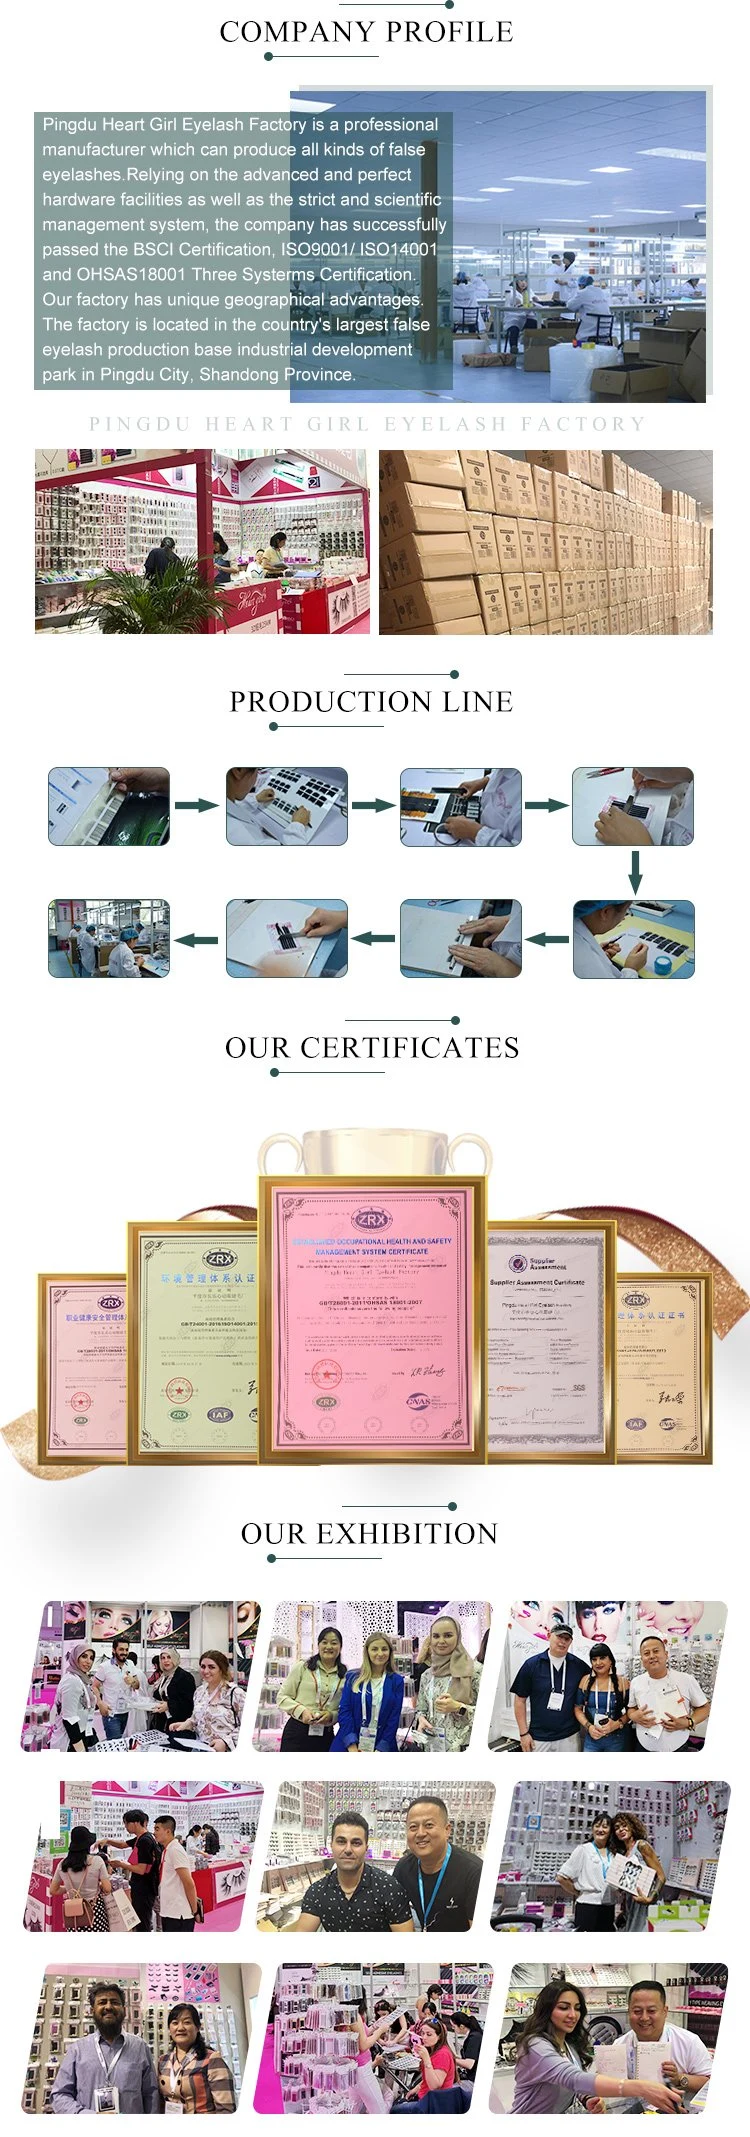 Bling Lashbox Diamond Wholesale Price 2021 New Arrival Diamond Case Custom Packaging 3D Mink Lashes